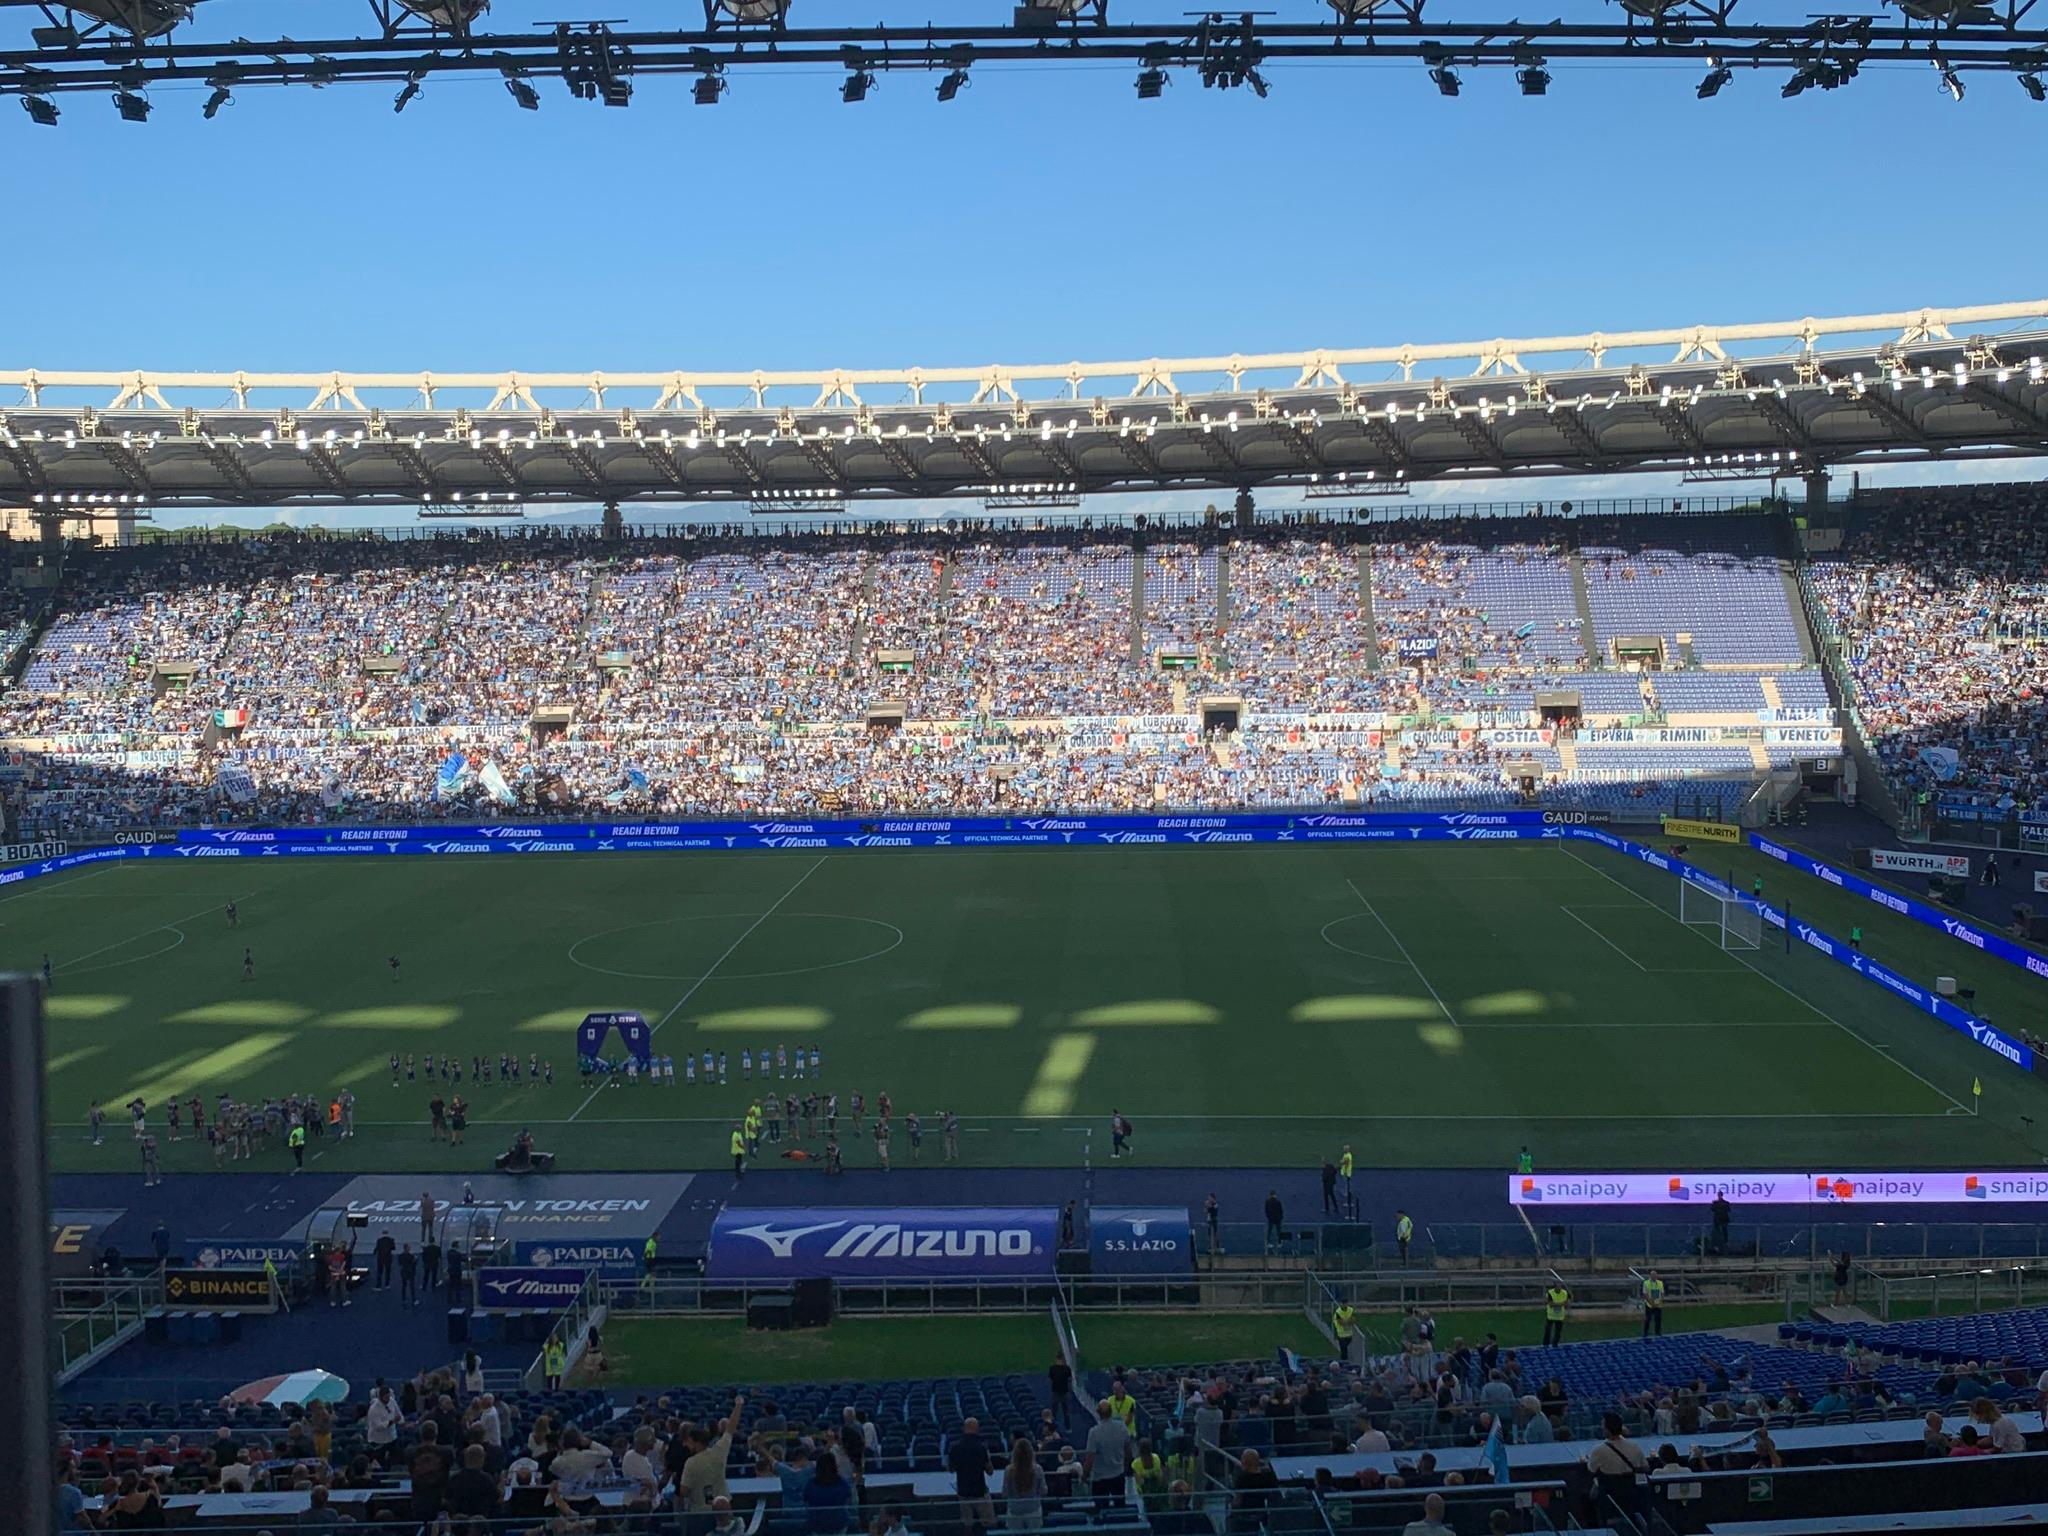 Lazio-Sturm Graz, quota 15 mila spettatori è più vicina